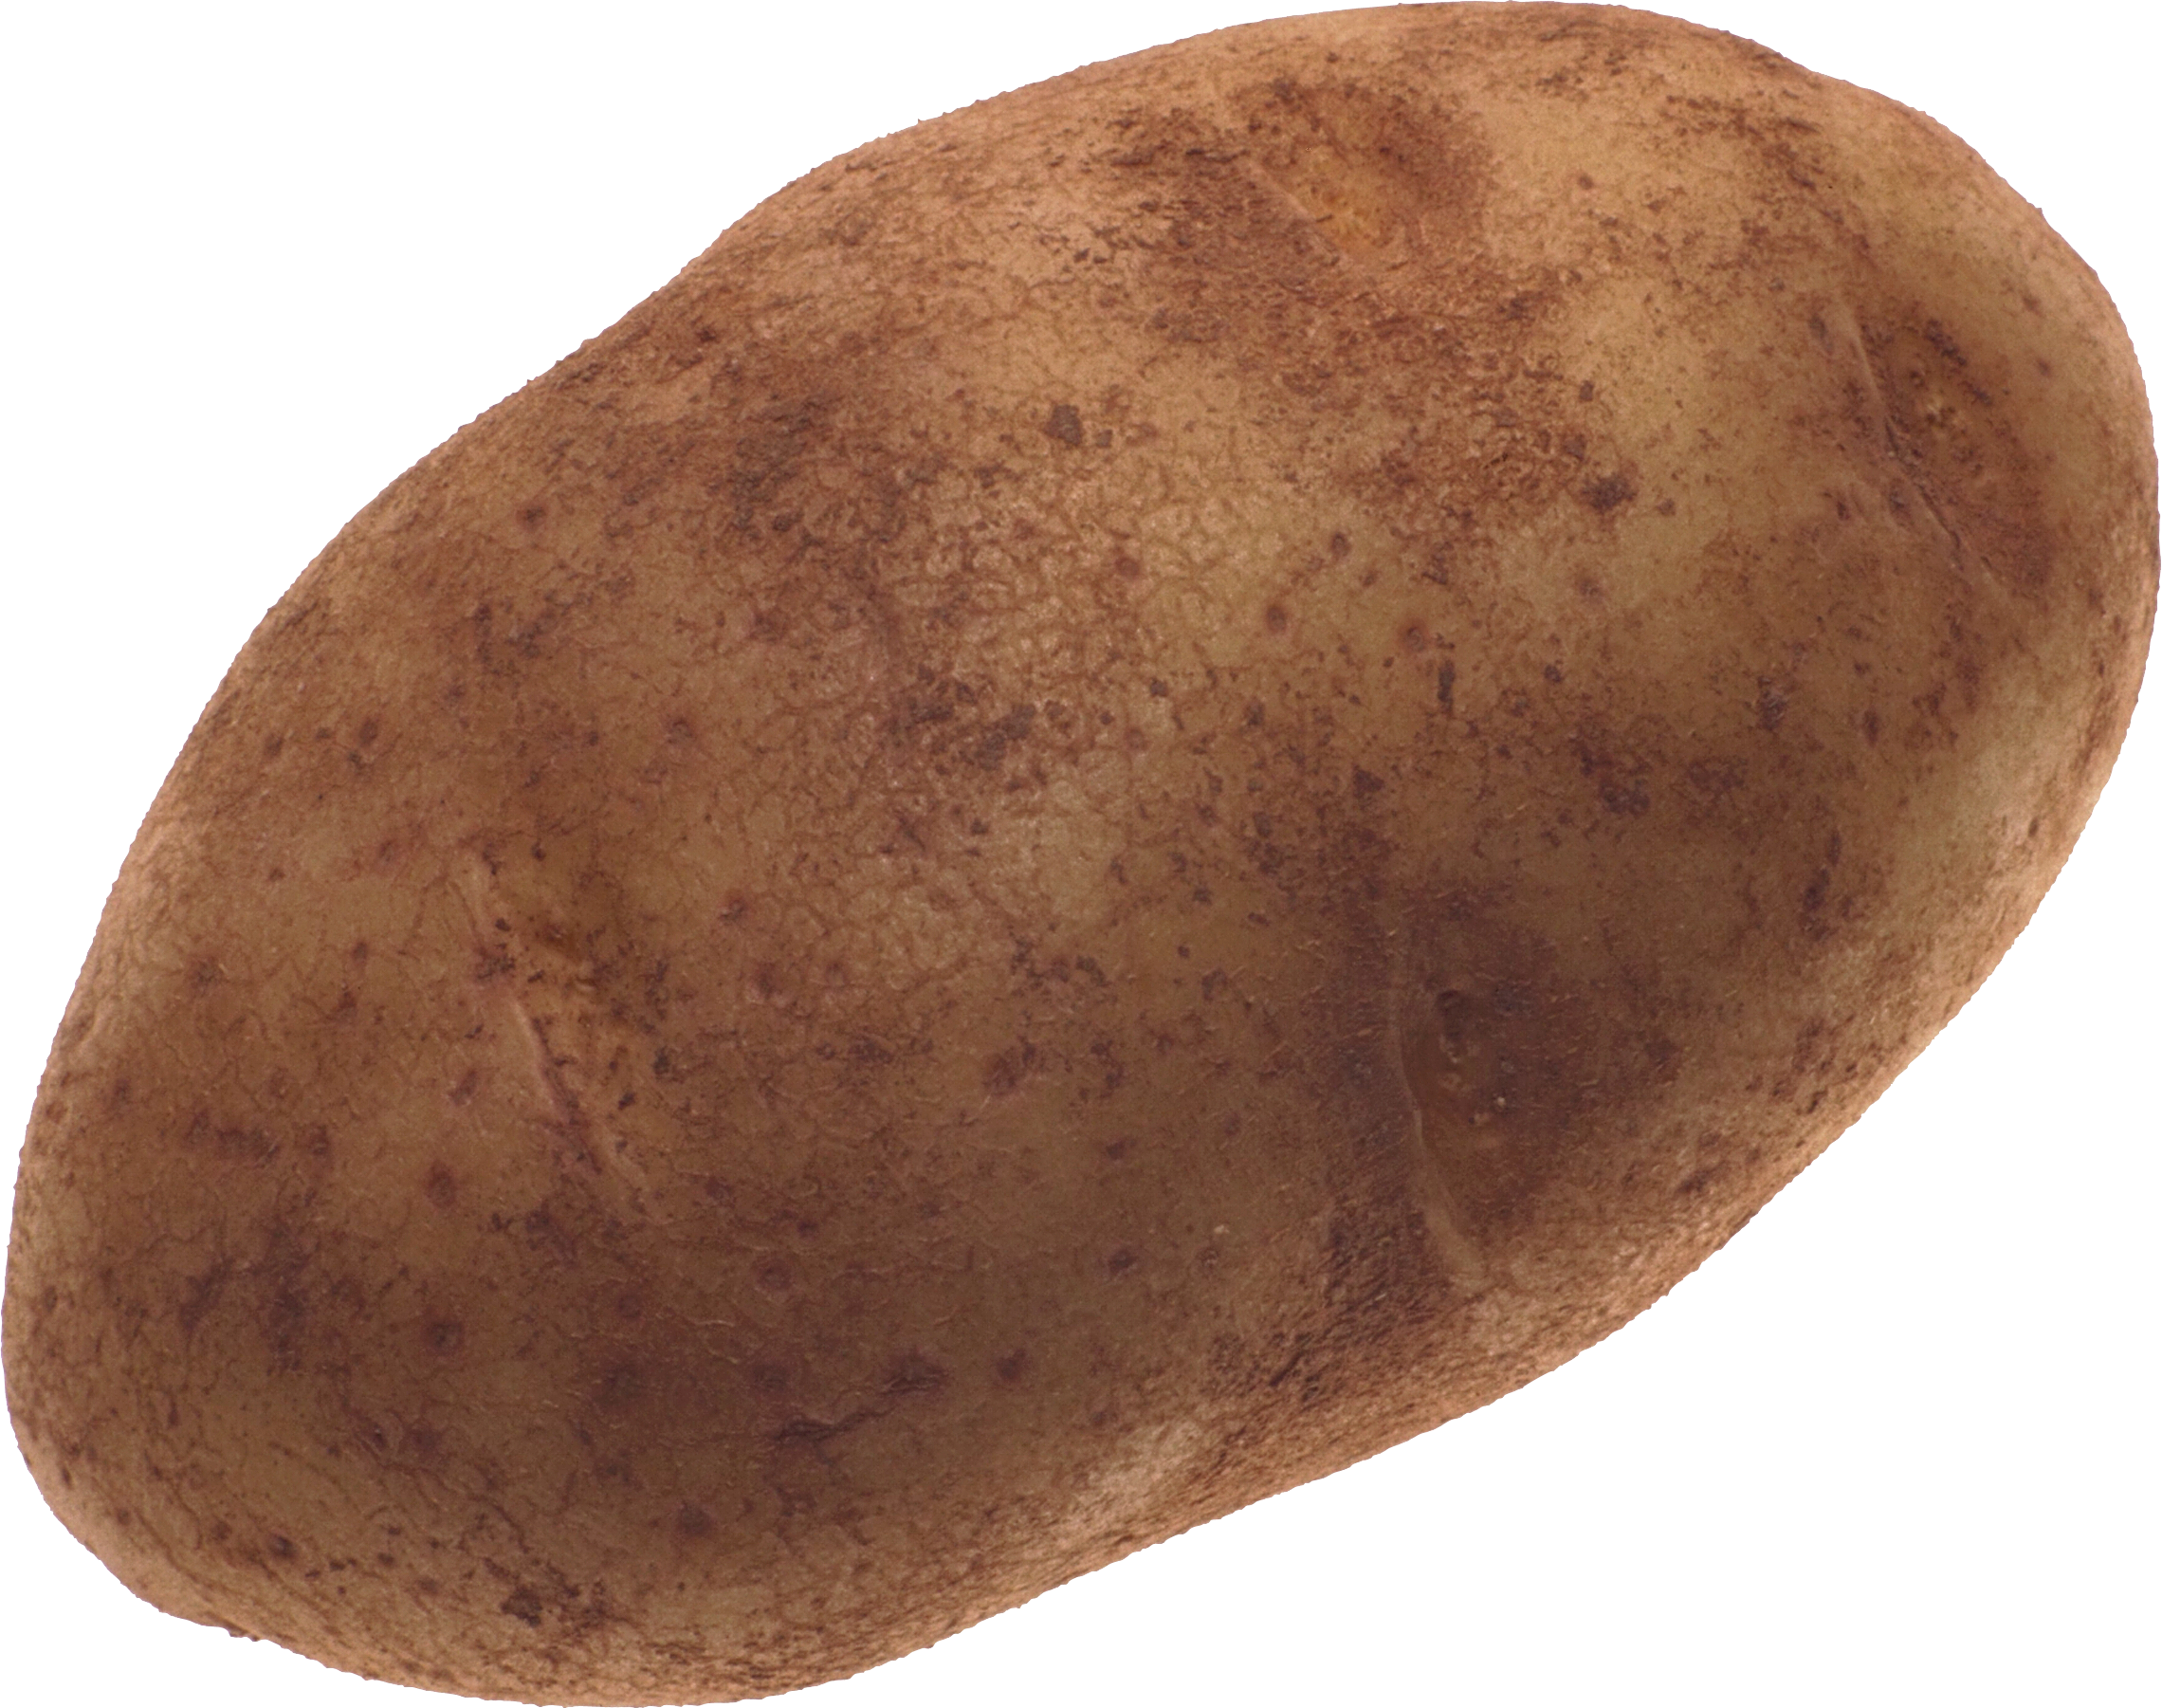 Potato PNG - 21840